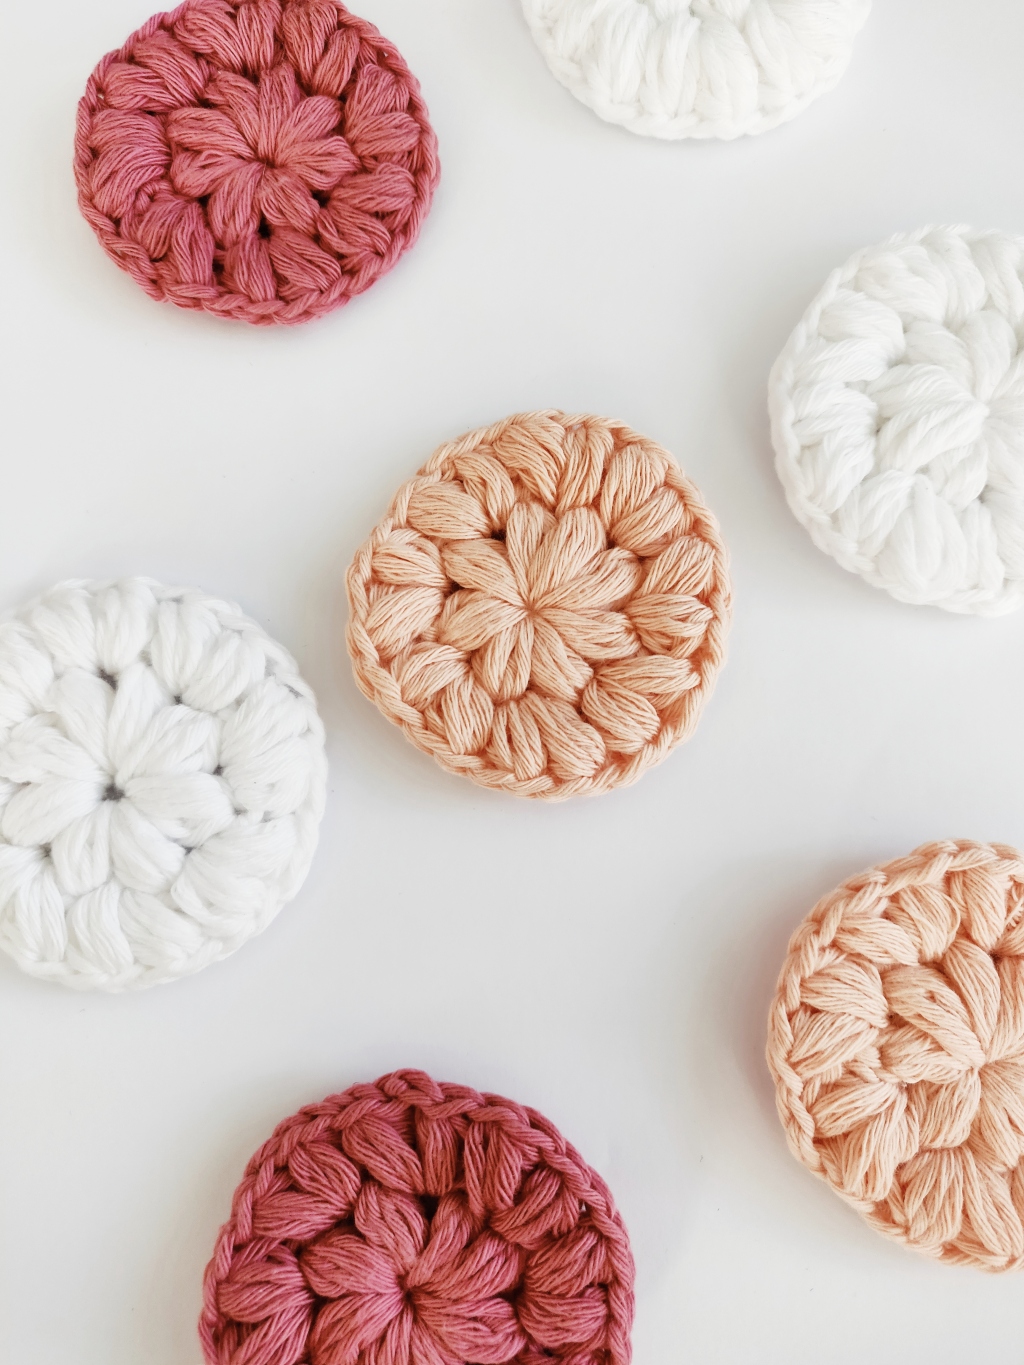 Crochet cotton pads // Virkatut kestovanulaput